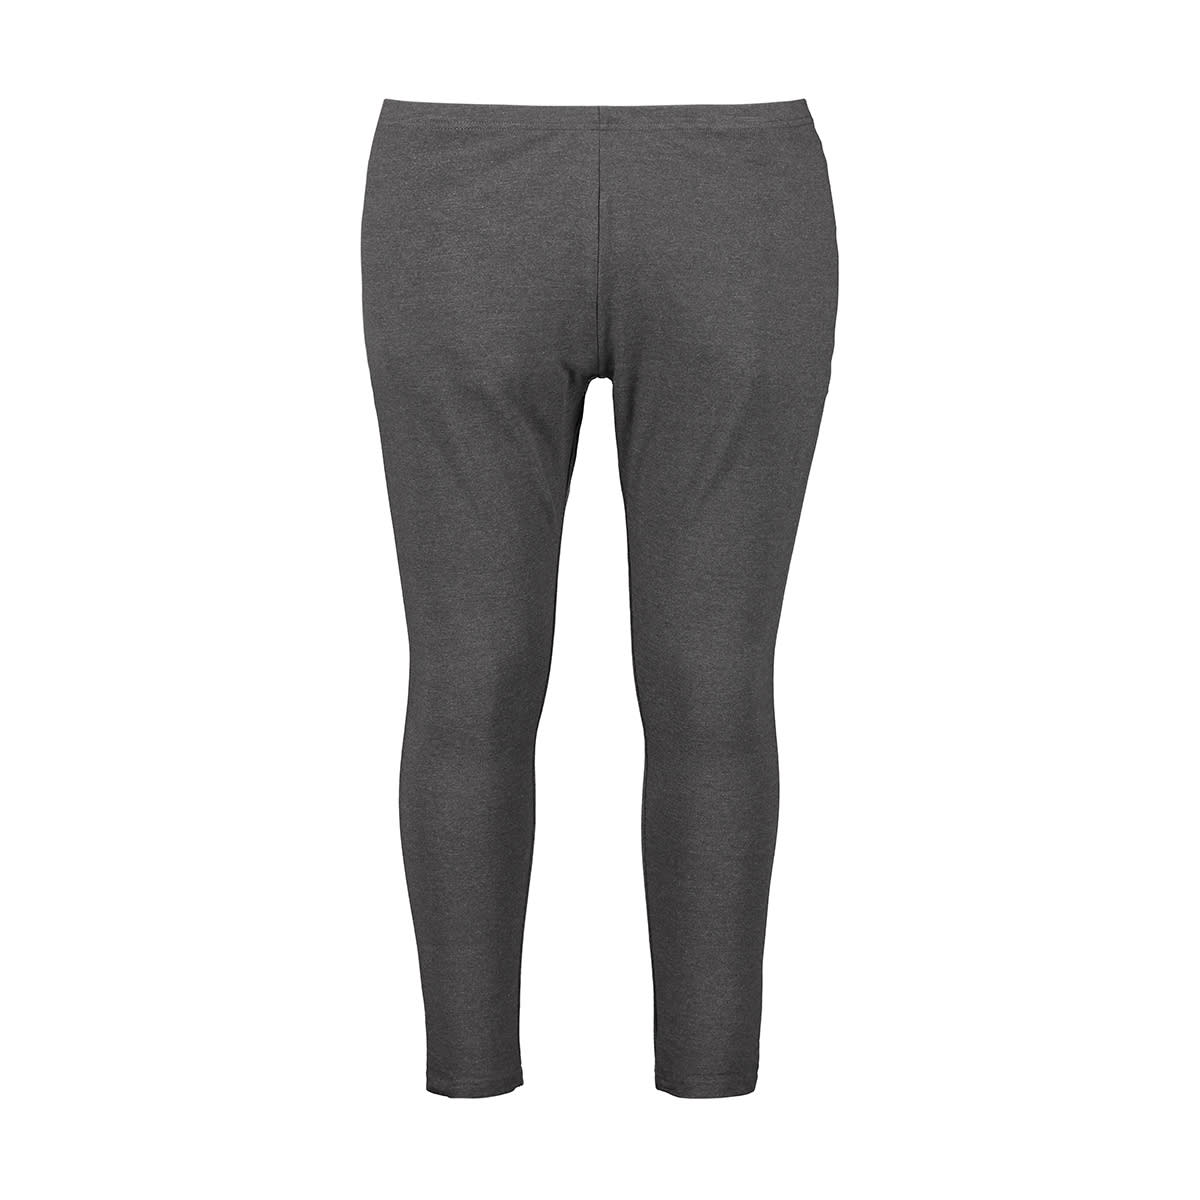 Women's Pants & Leggings | Dress, Cargo & Work Pants | Kmart